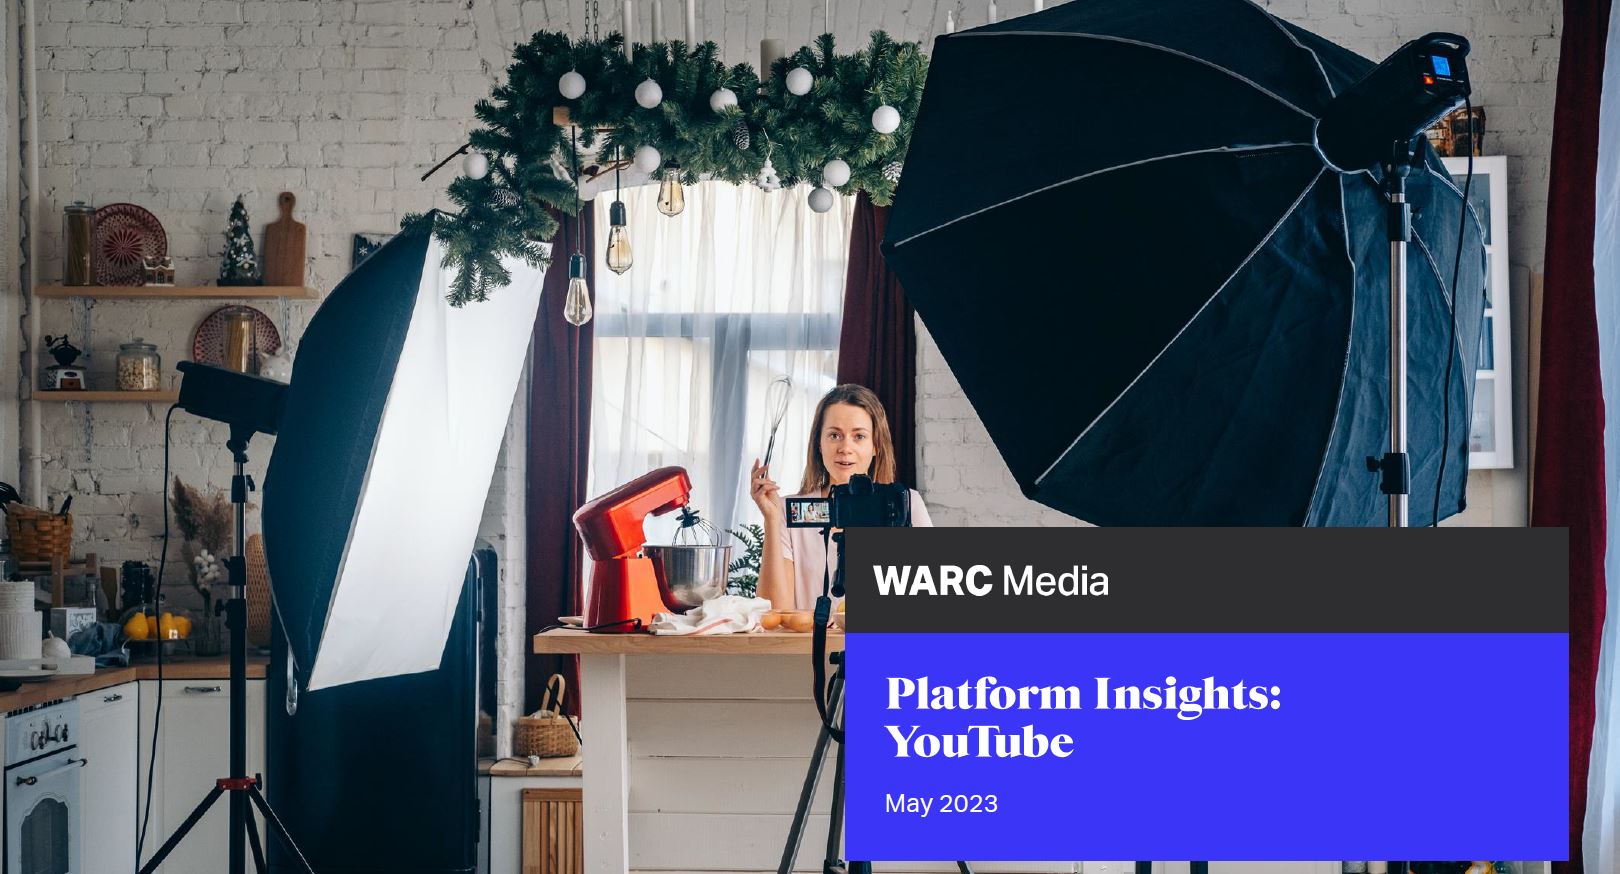 WARC Media Platform Insights: YouTube